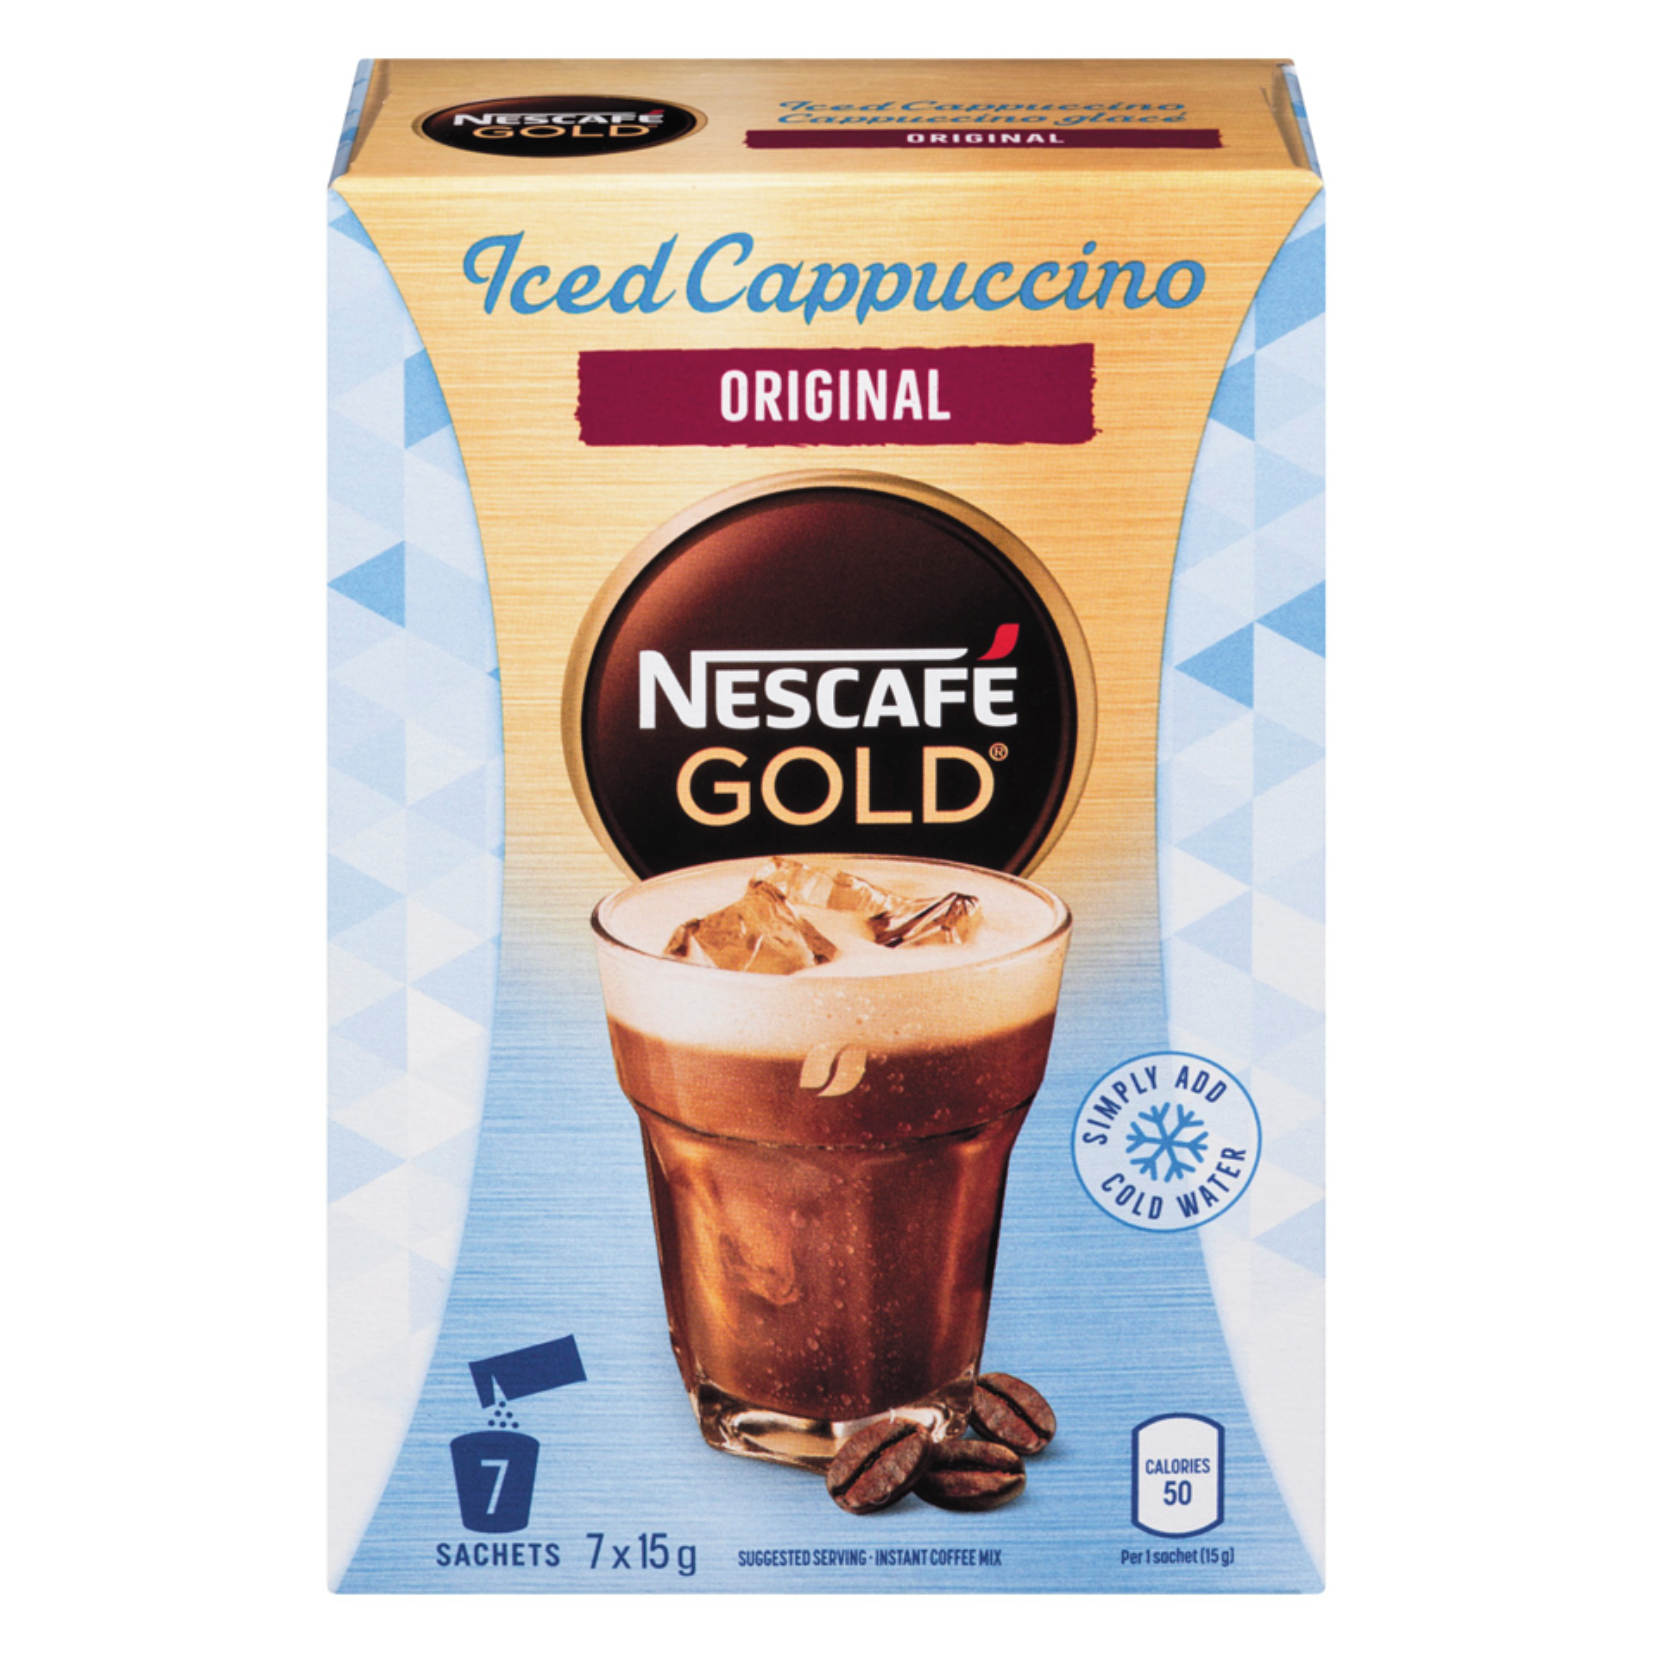 Nescafé Gold Original Iced Cappuccino 15g x 7